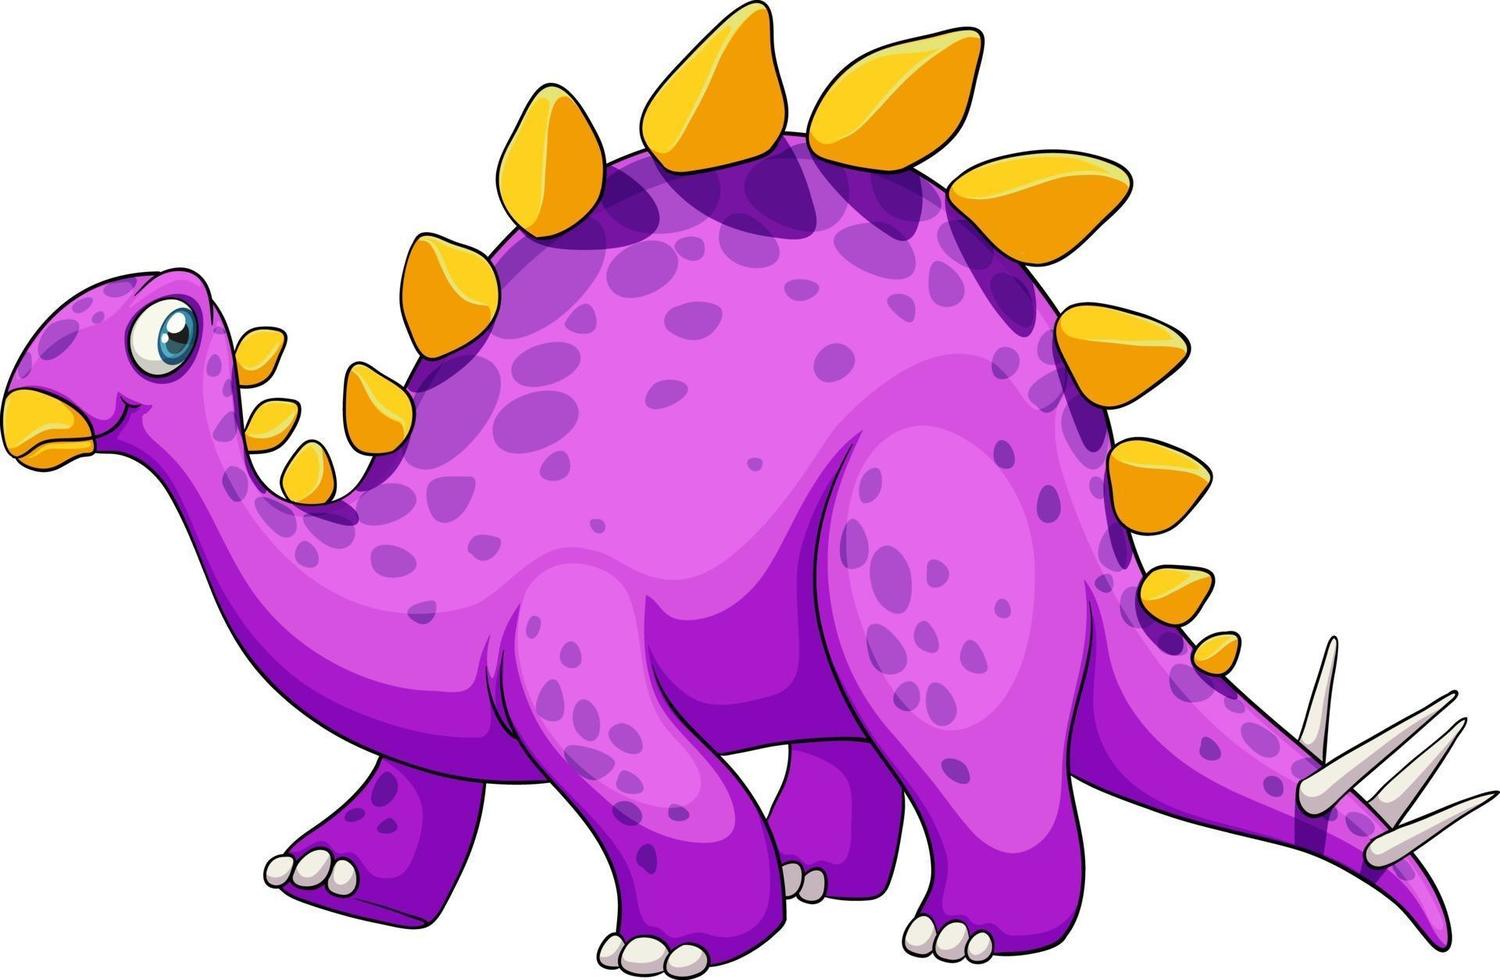 A stegosaurus dinosaur cartoon character vector